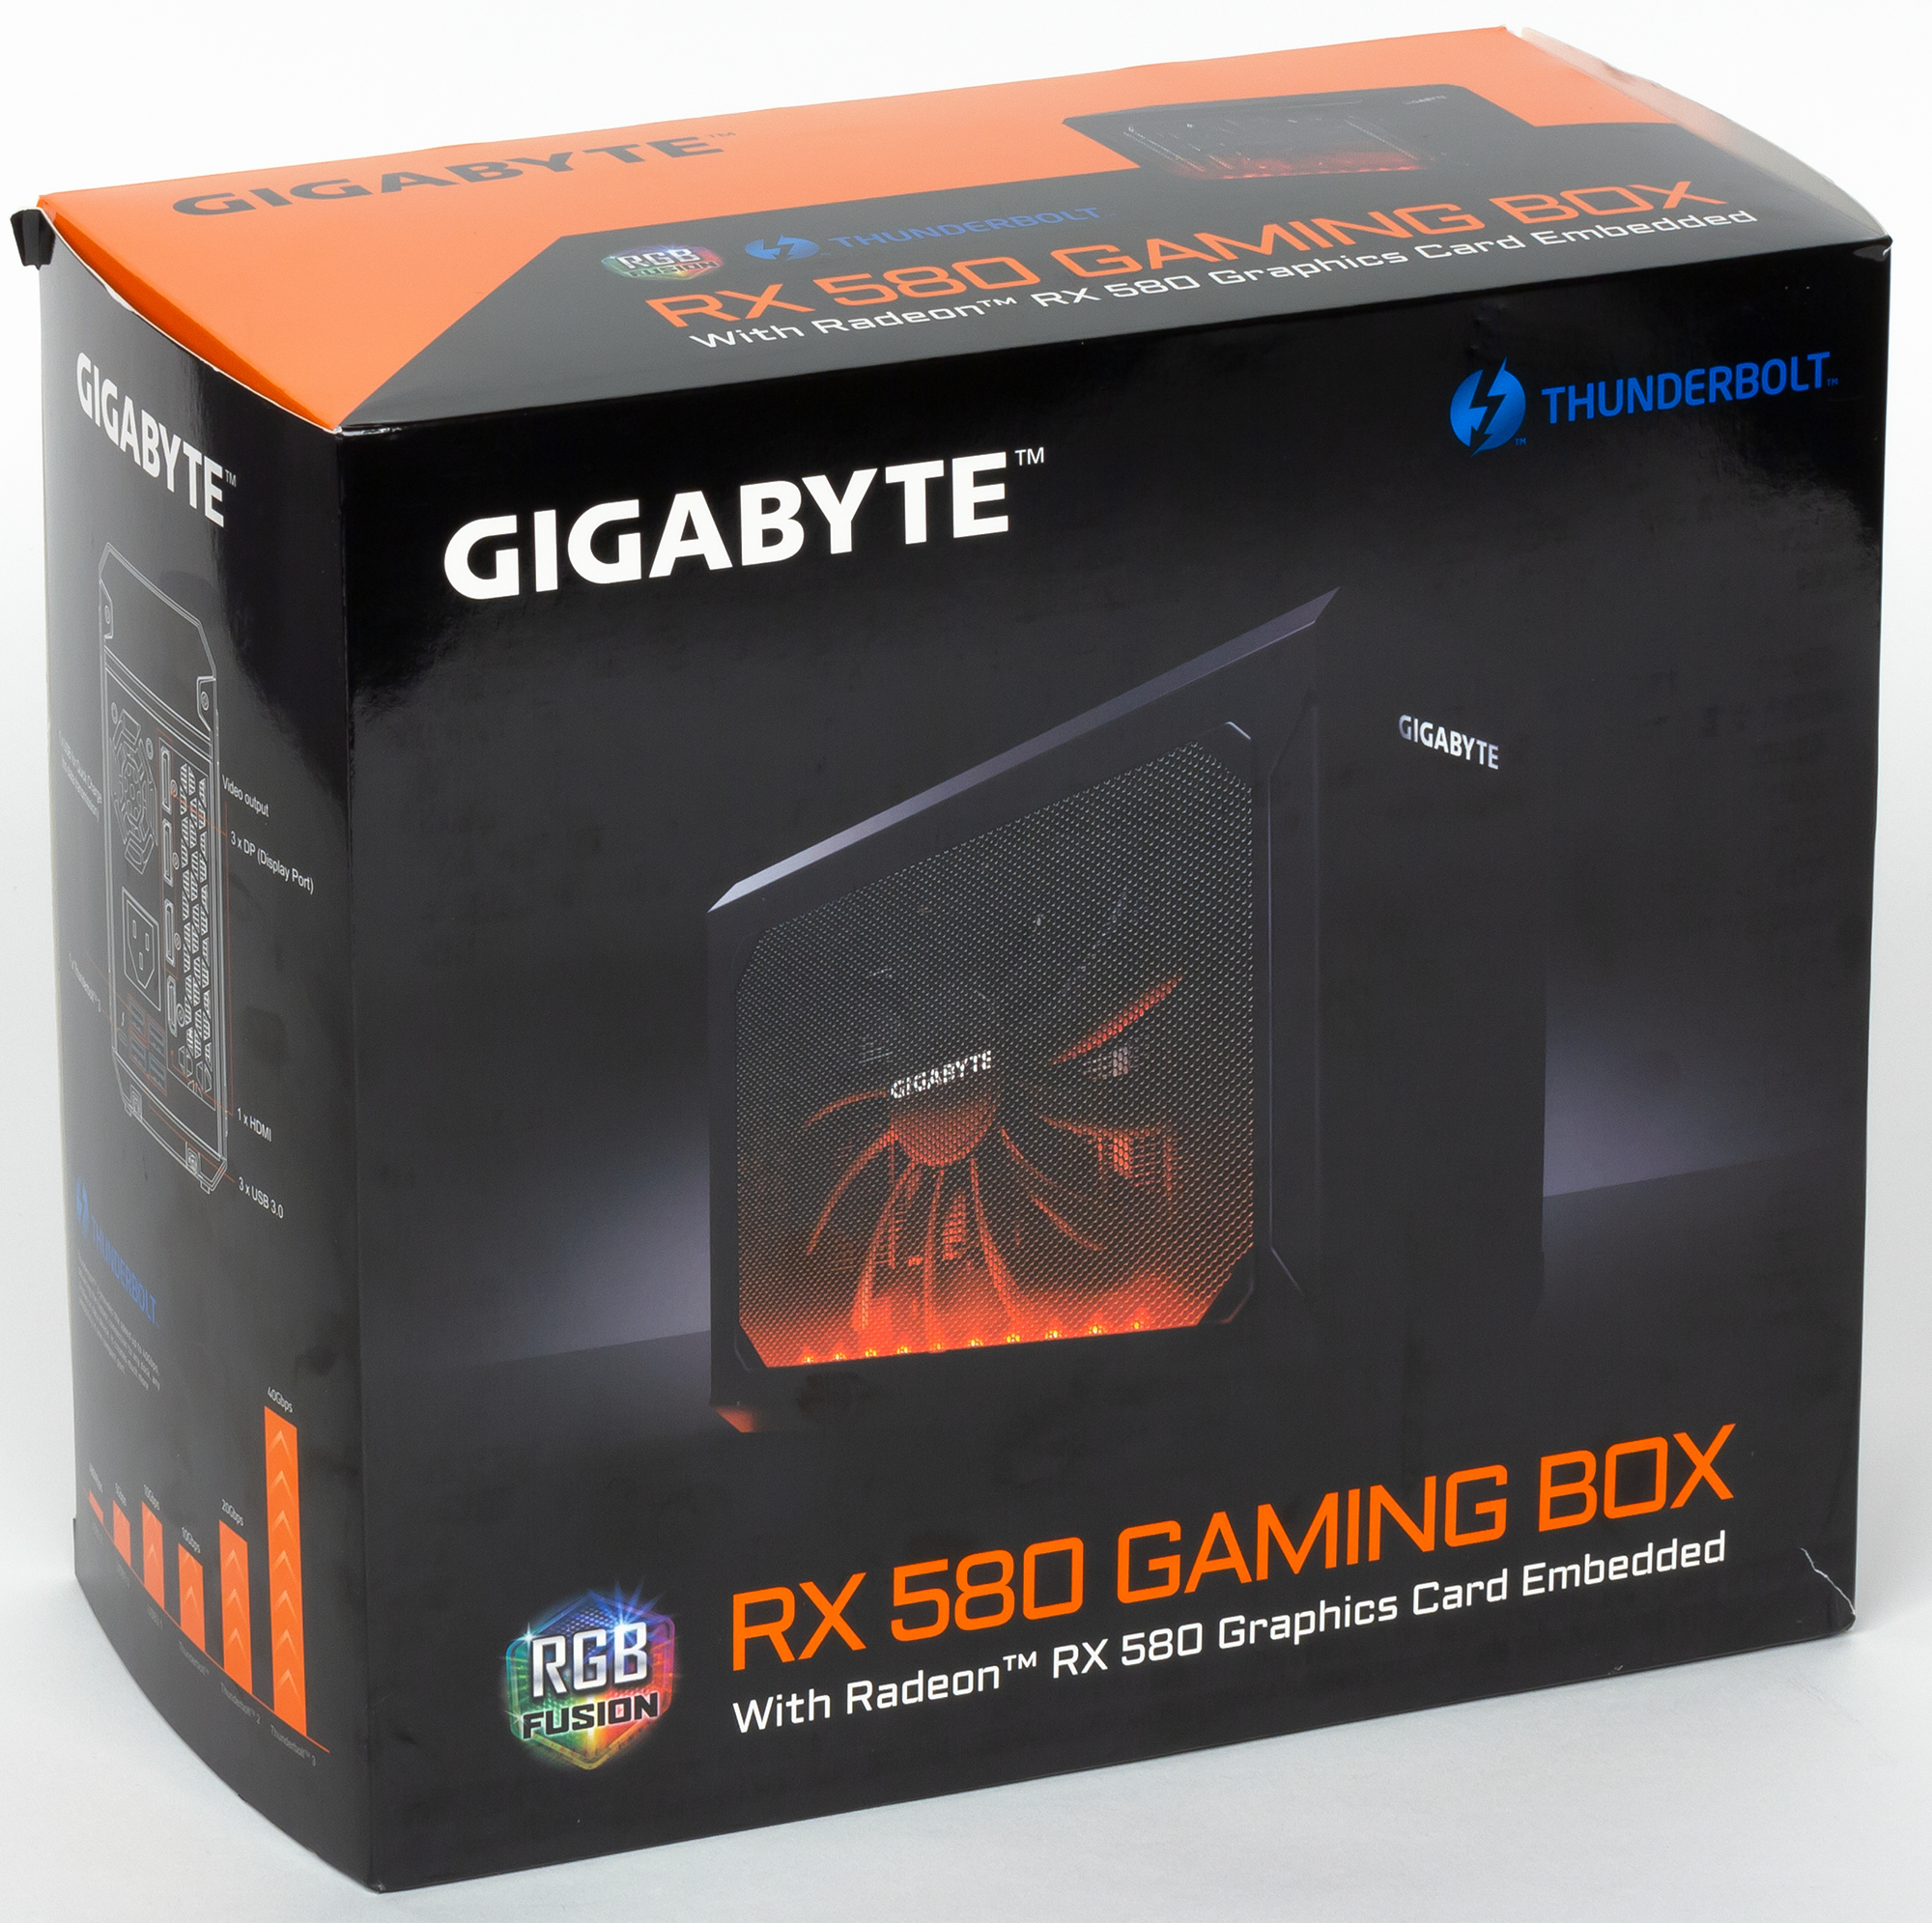 RX 580 Gigabyte. Gigabyte RX 580 Gaming Box. Внешняя видеокарта Thunderbolt. Внешний блок для видеокарты. Gigabyte gaming box